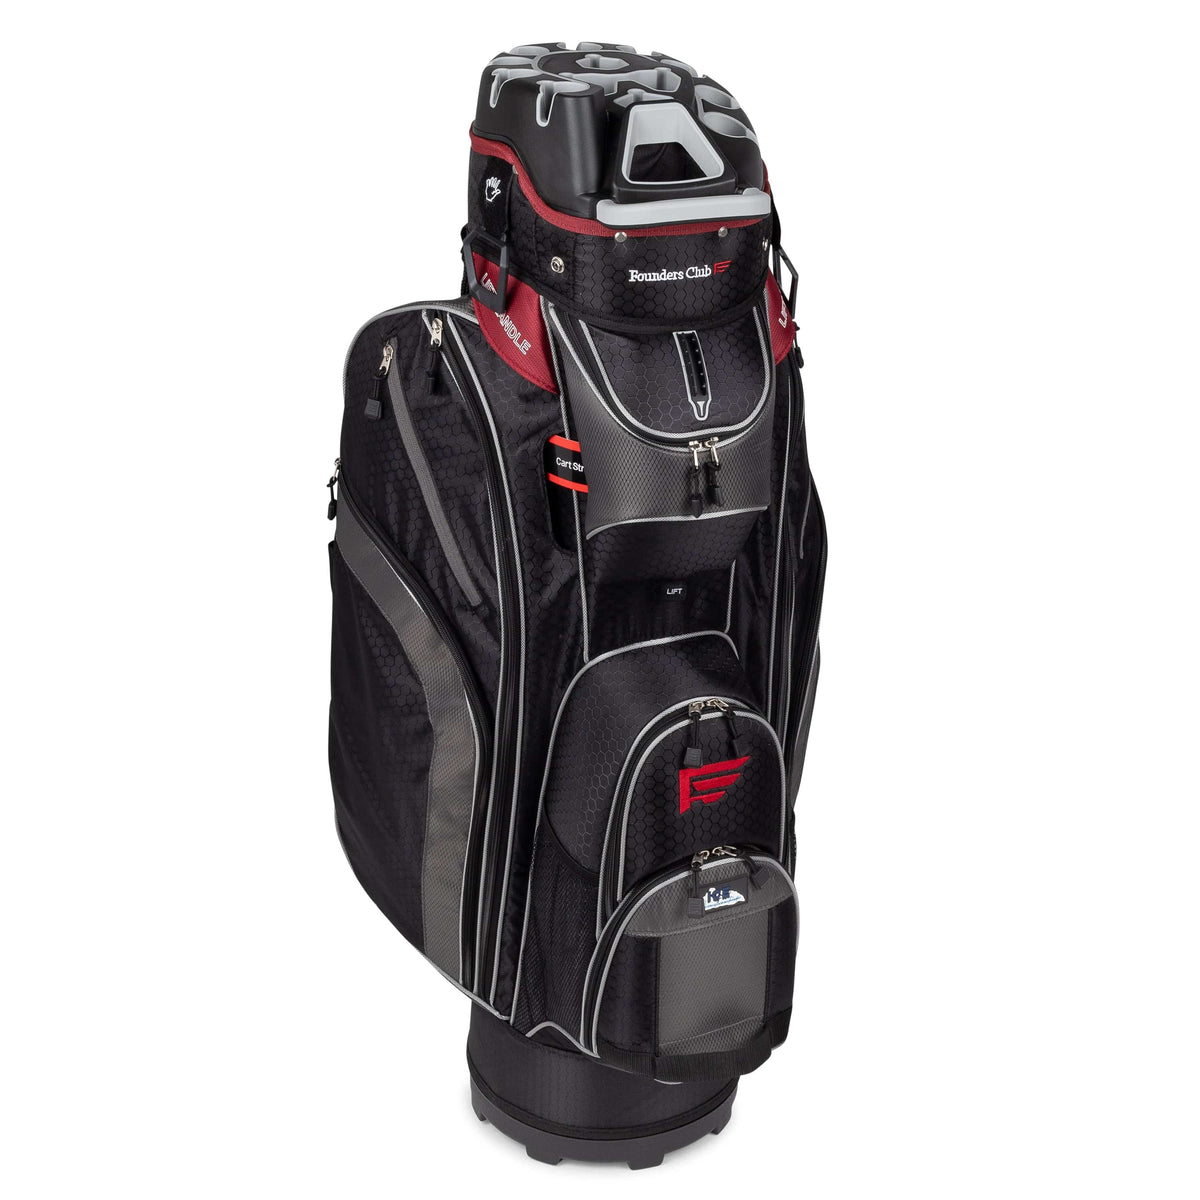 Founders Club 3rd Generation Premium Organizer 14 Way Golf Cart Bag - Charcoal